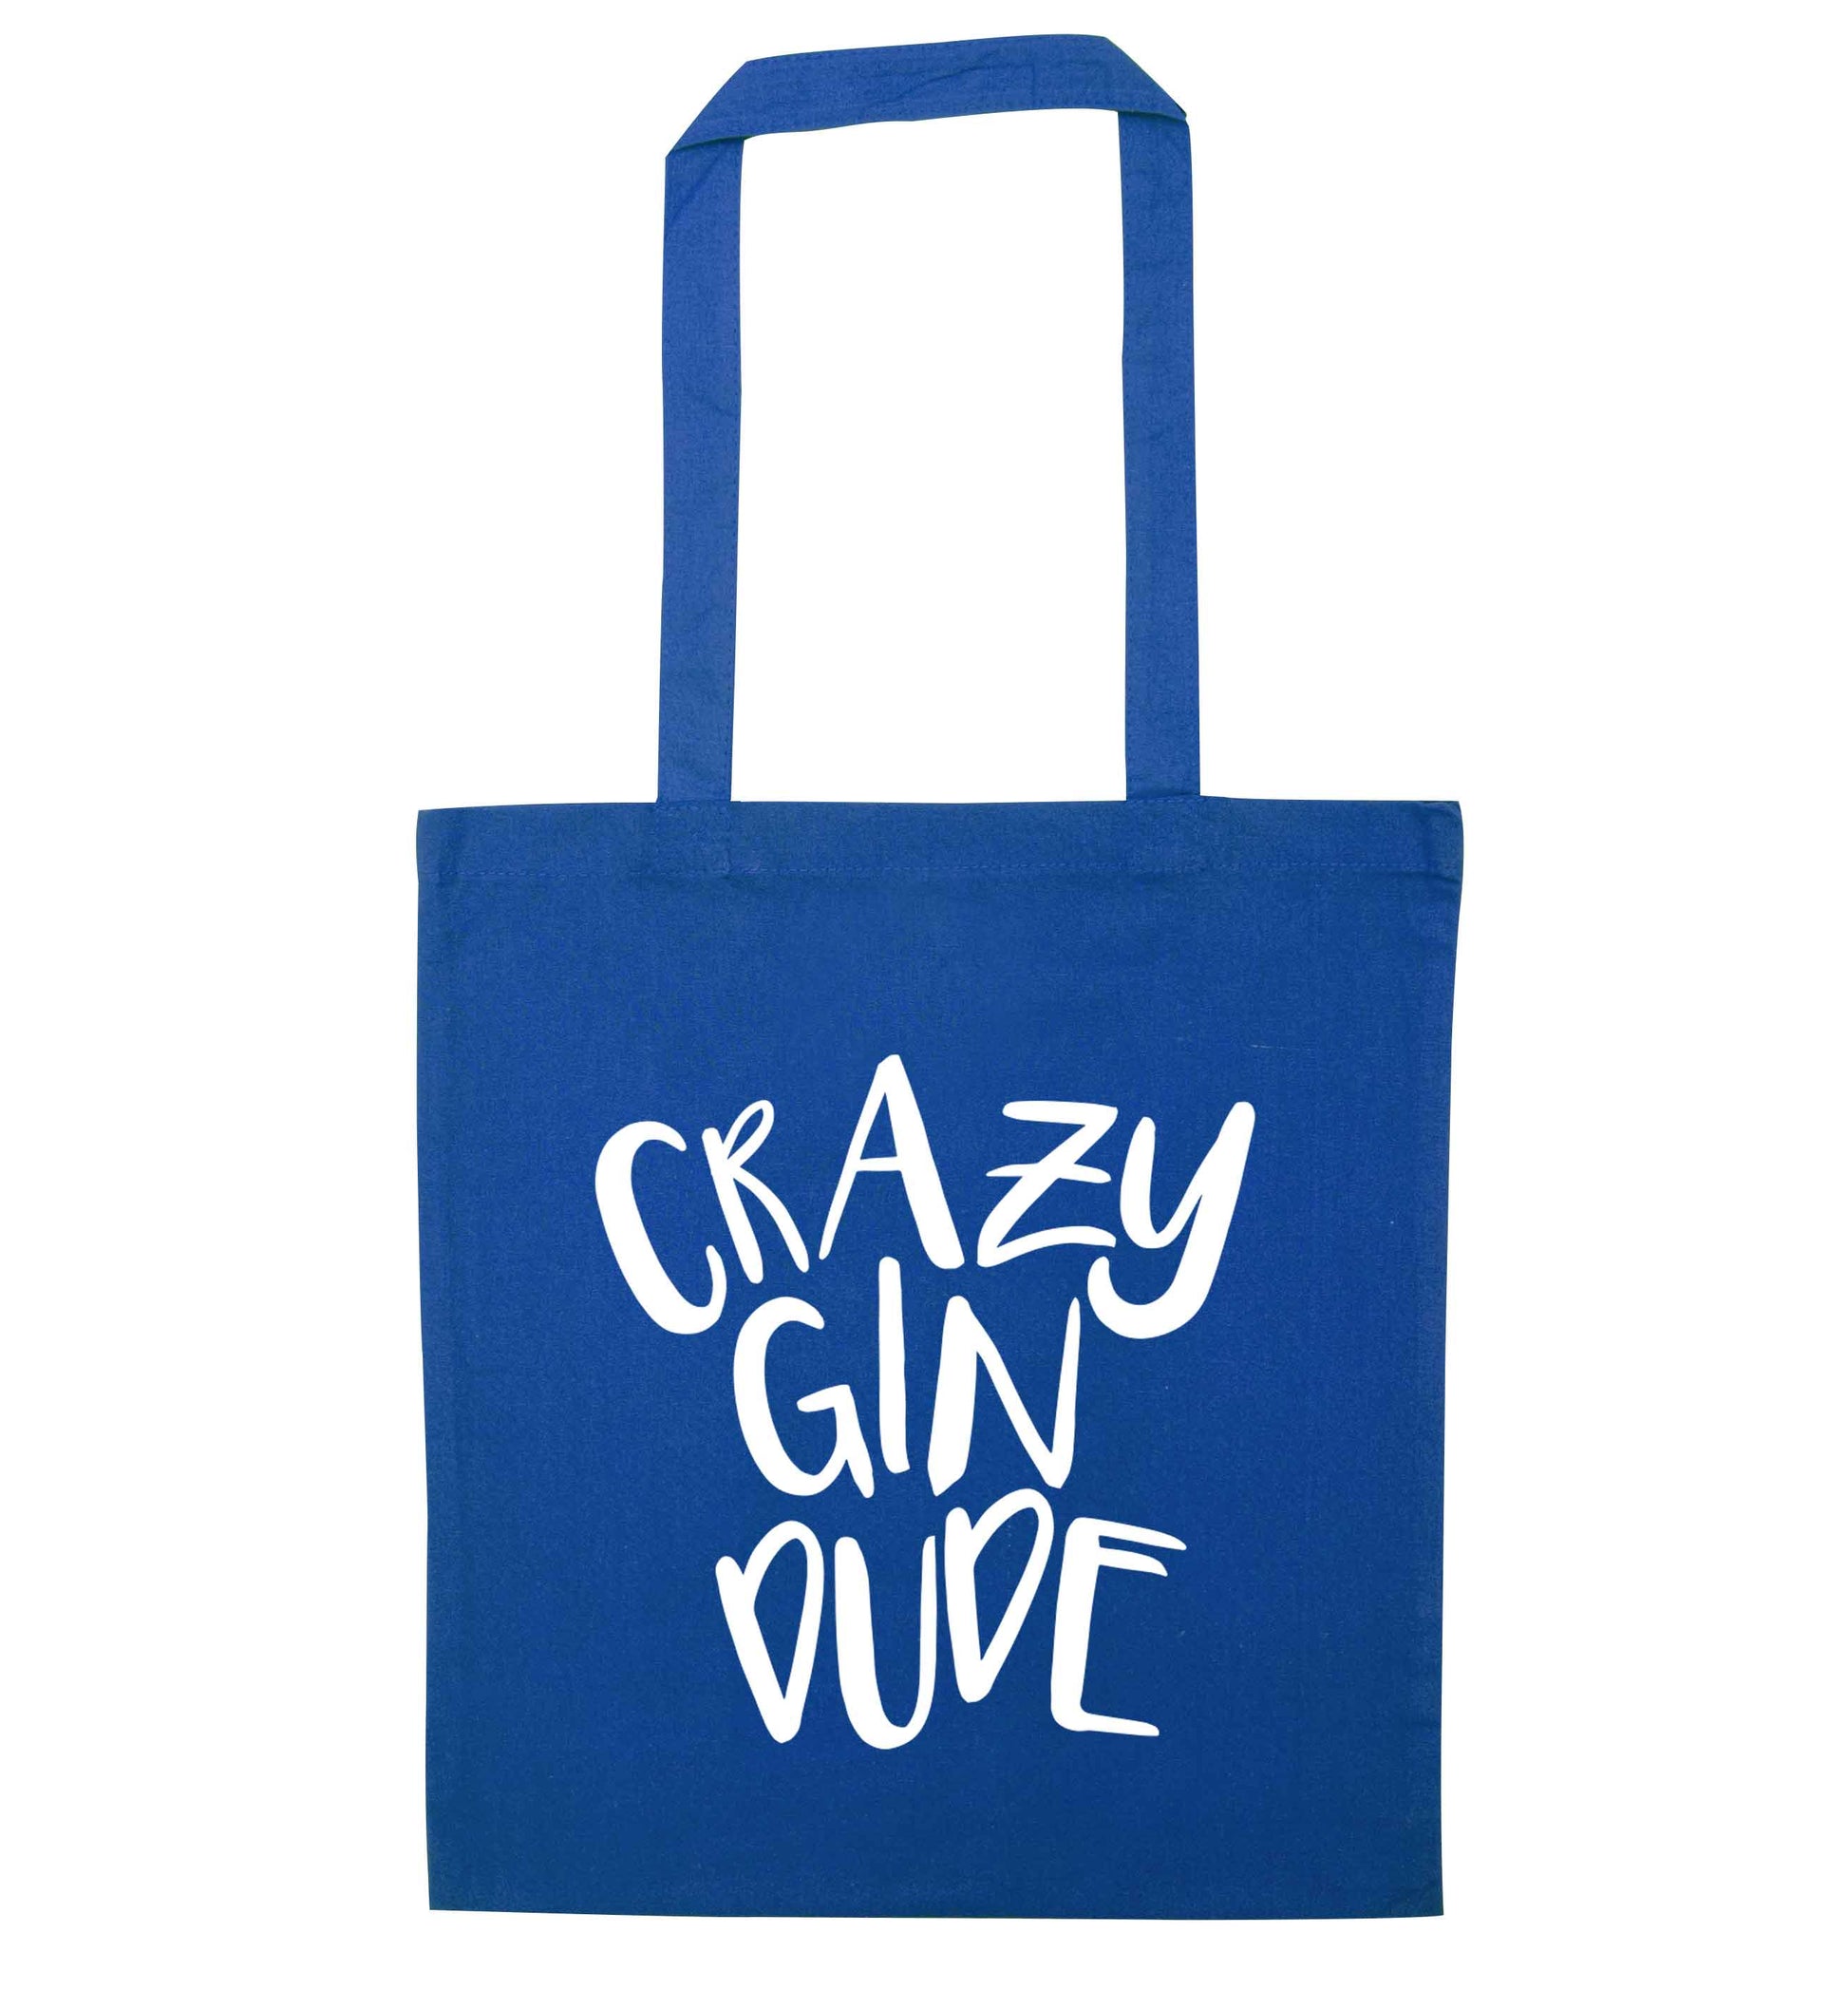 Crazy gin dude blue tote bag